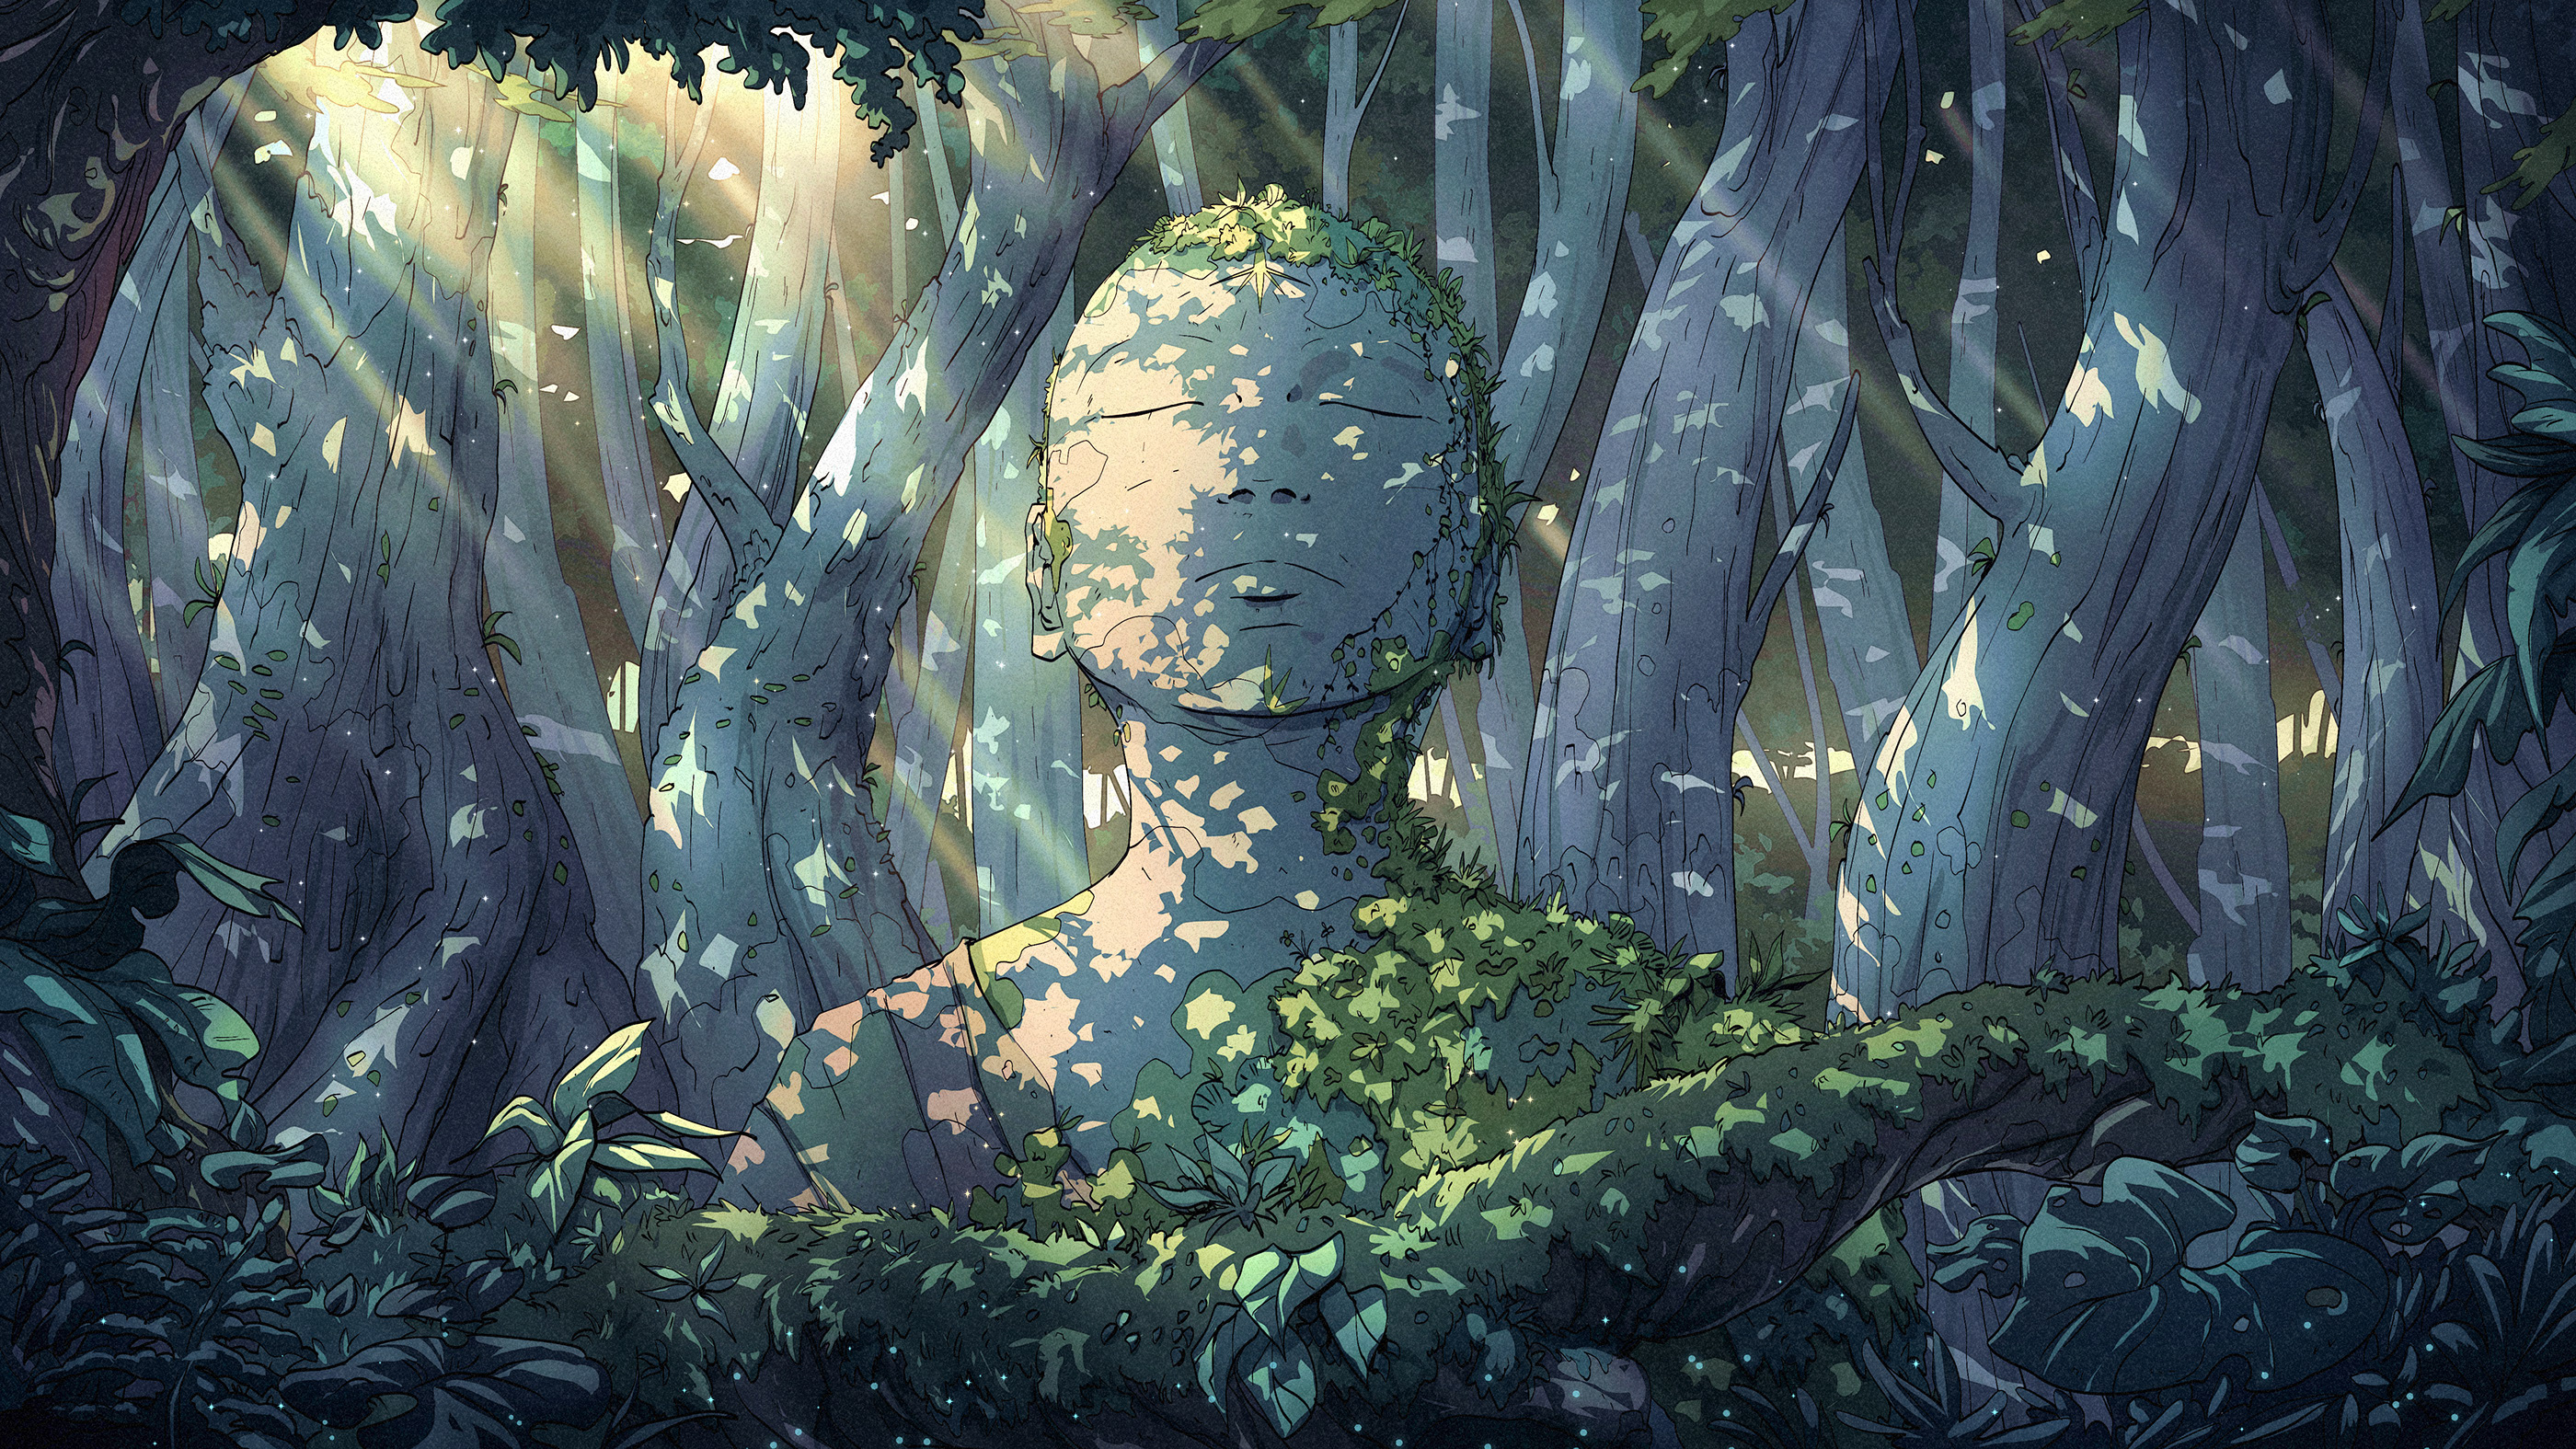 General 2800x1575 digital art illustration artwork drawing fantasy art Ukiyo-e nature landscape forest trees statue Christian Benavides